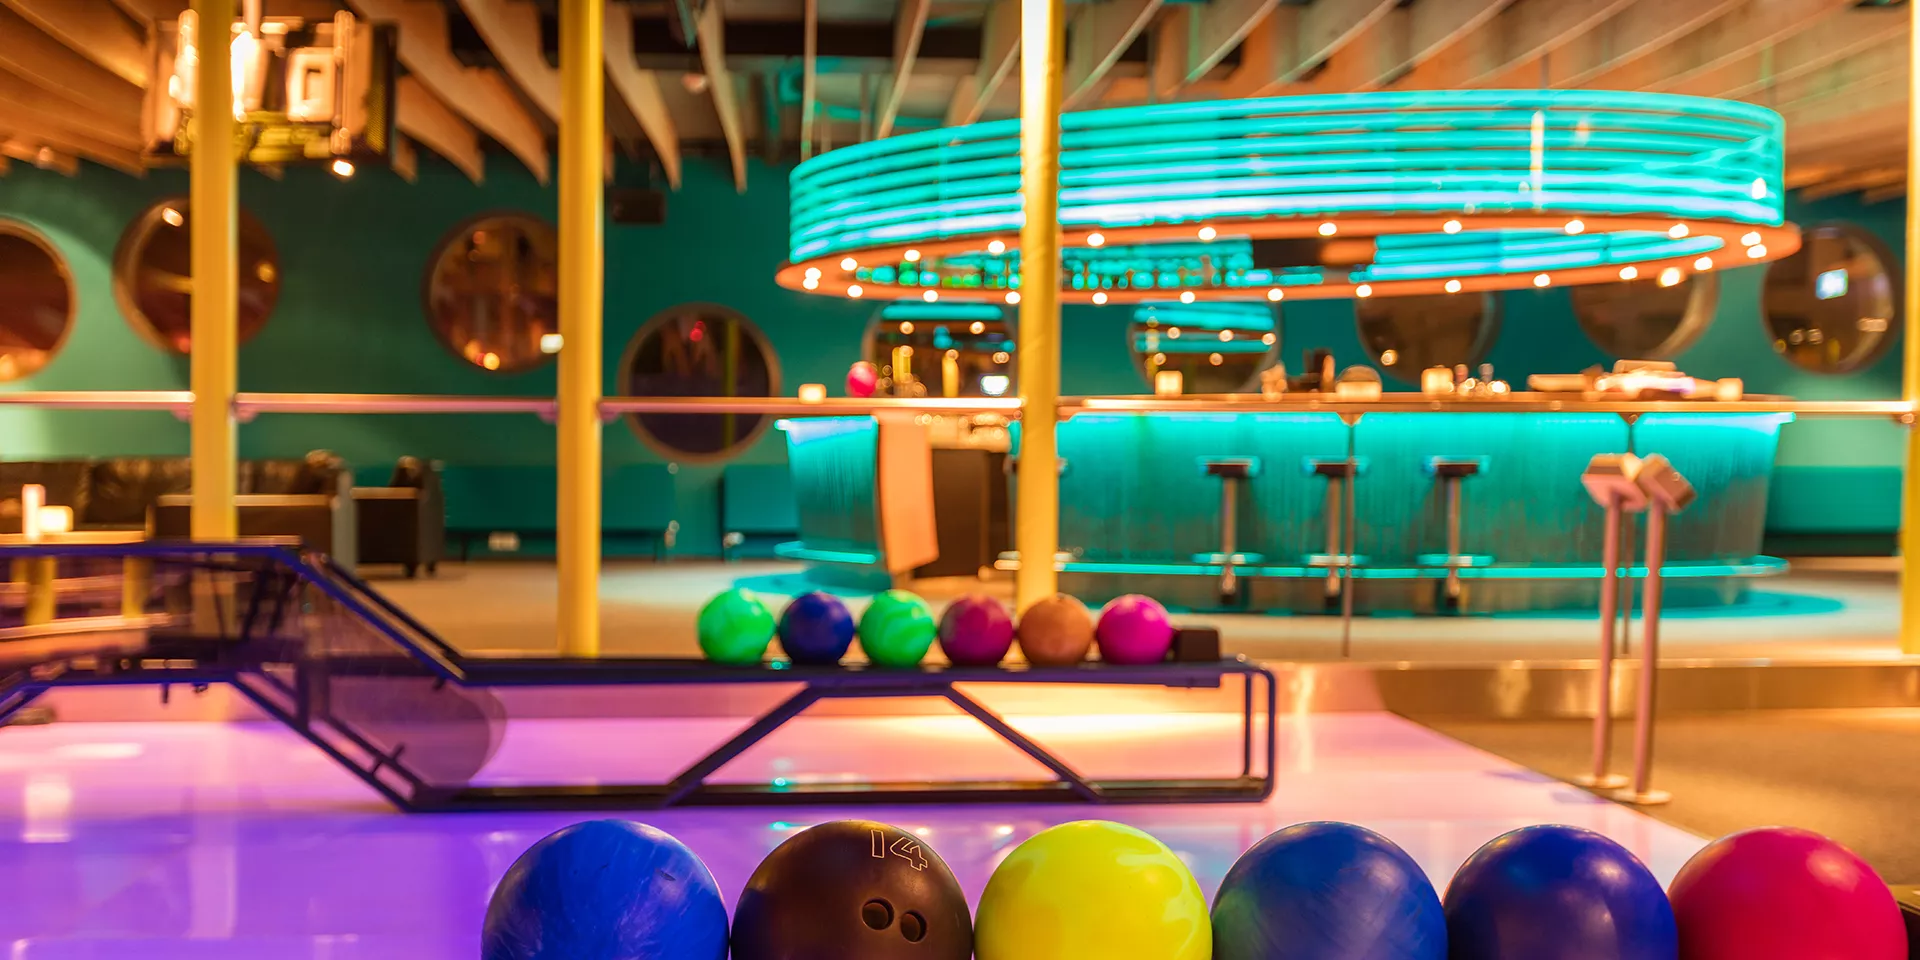 10 Bowlingbahnen im Hotel riverside